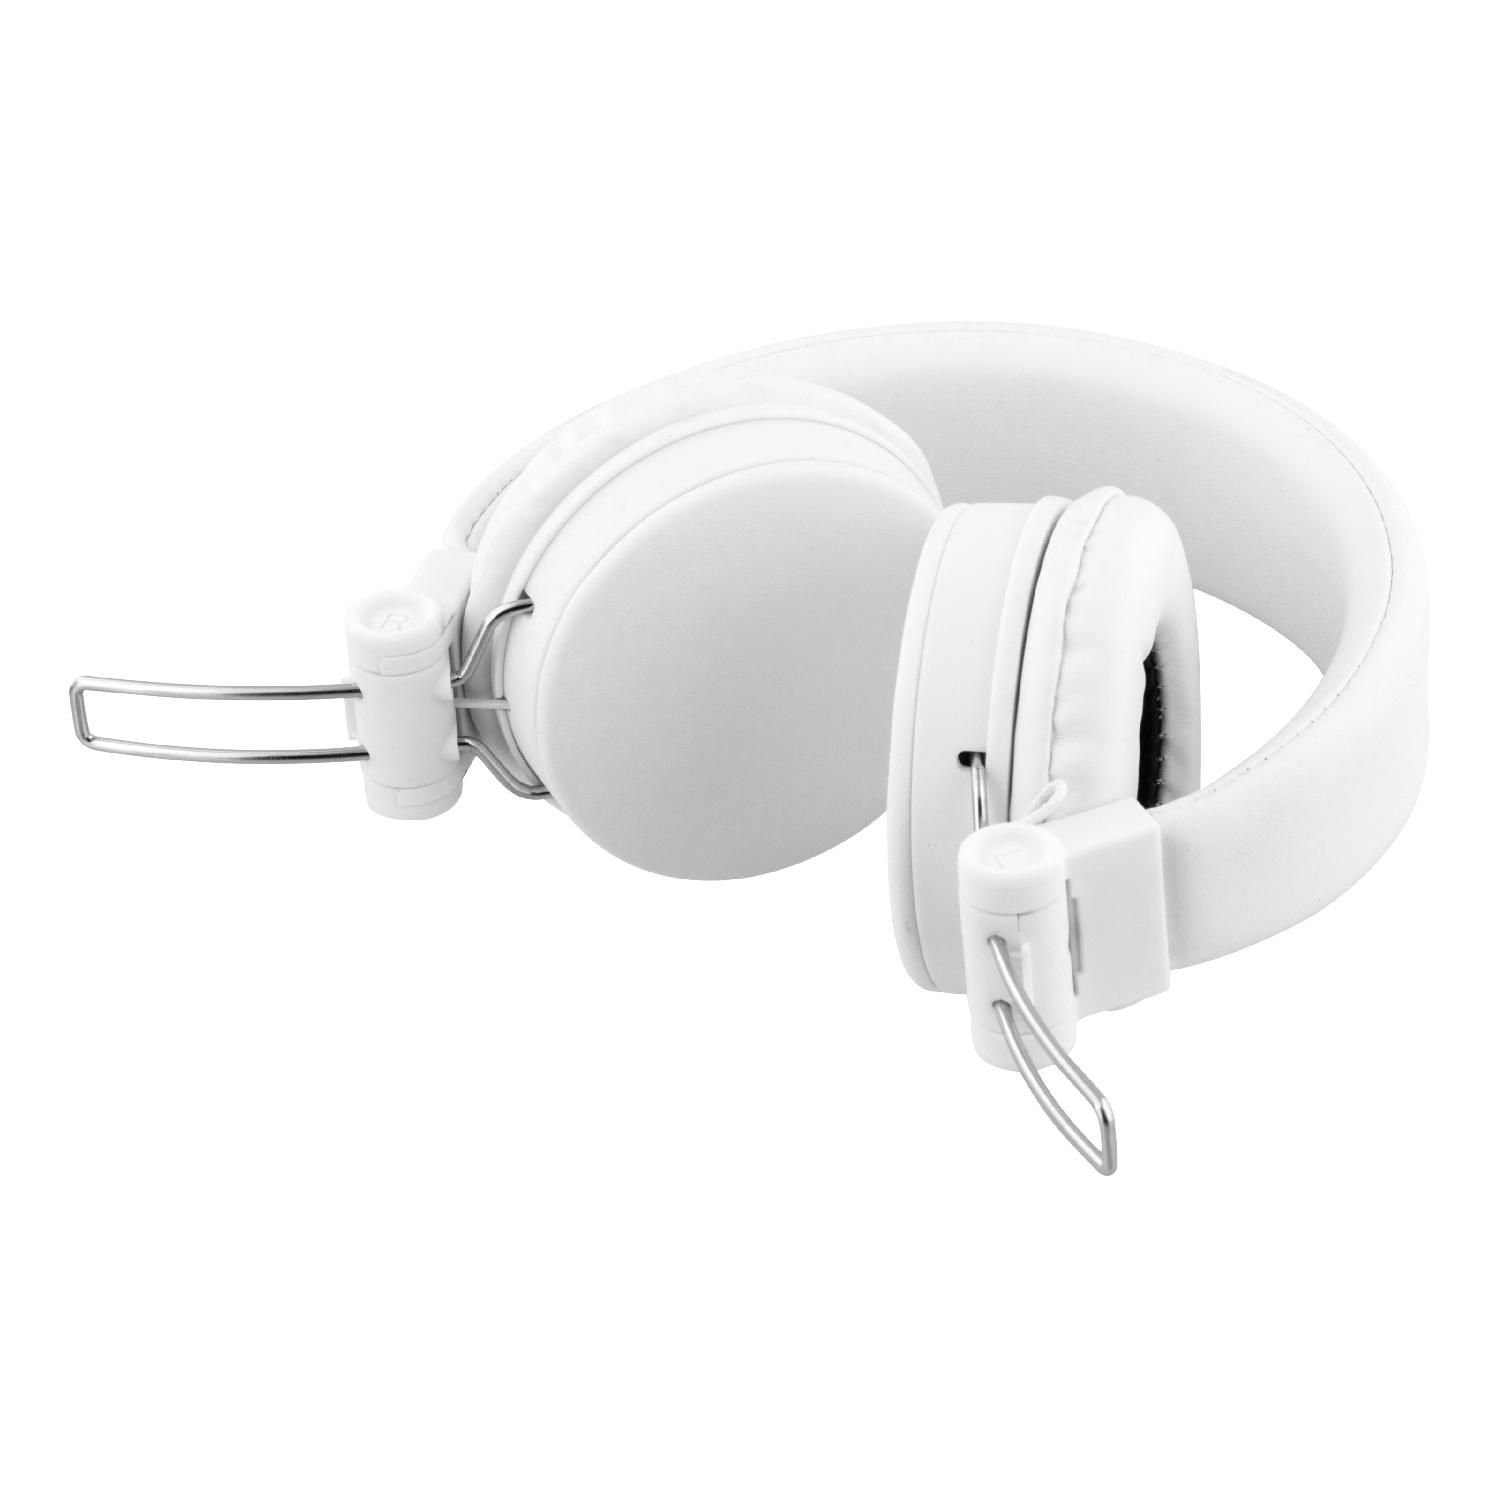 STREETZ Kopfhörer 1,2m Kabel 3.5mm Jahre (integriertes weiß Mikrofon, 5 Headset, On-Ear-Kopfhörer Herstellergarantie) inkl. Klinkenanschluss faltbares Ohrpolster